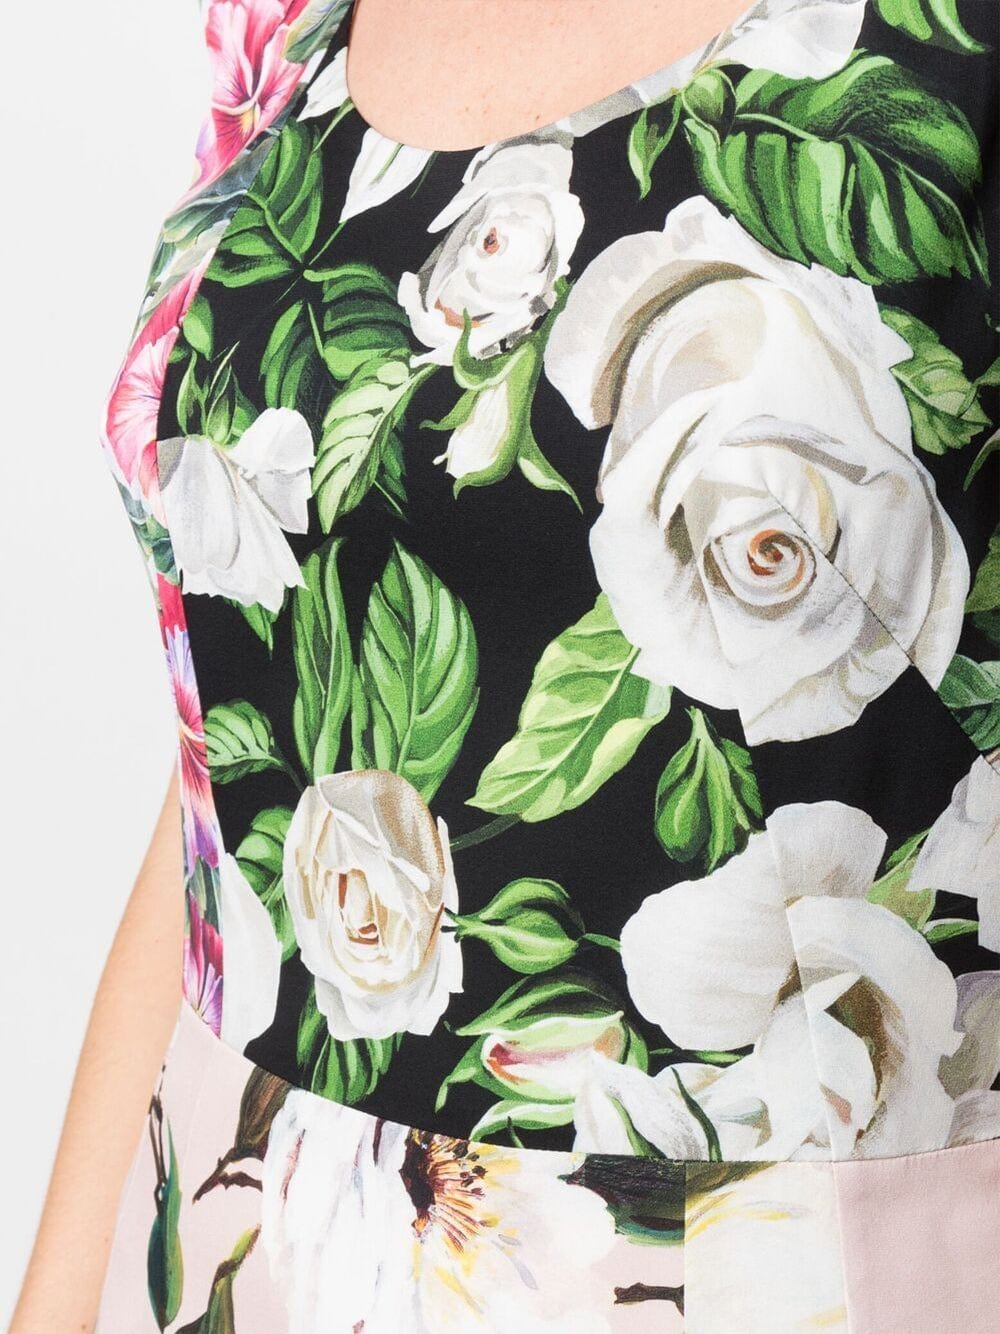 Dolce & Gabbana Floral-Print Panelled Dress